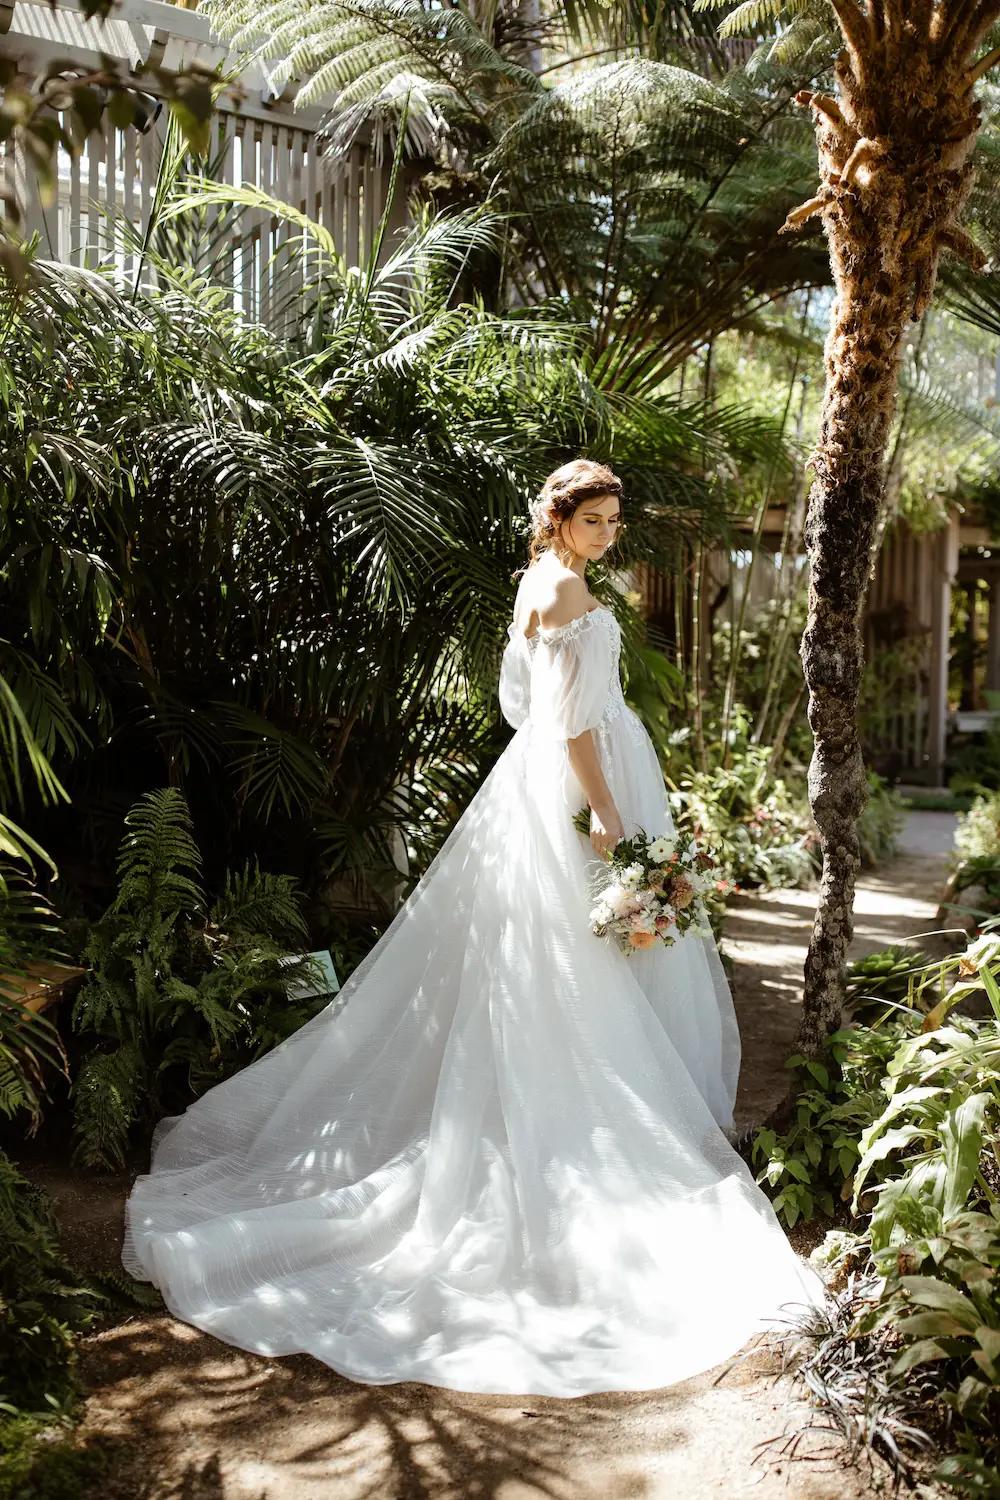 Sydney Wears Romantic Off the Shoulders Wedding Dress. Mobile Image